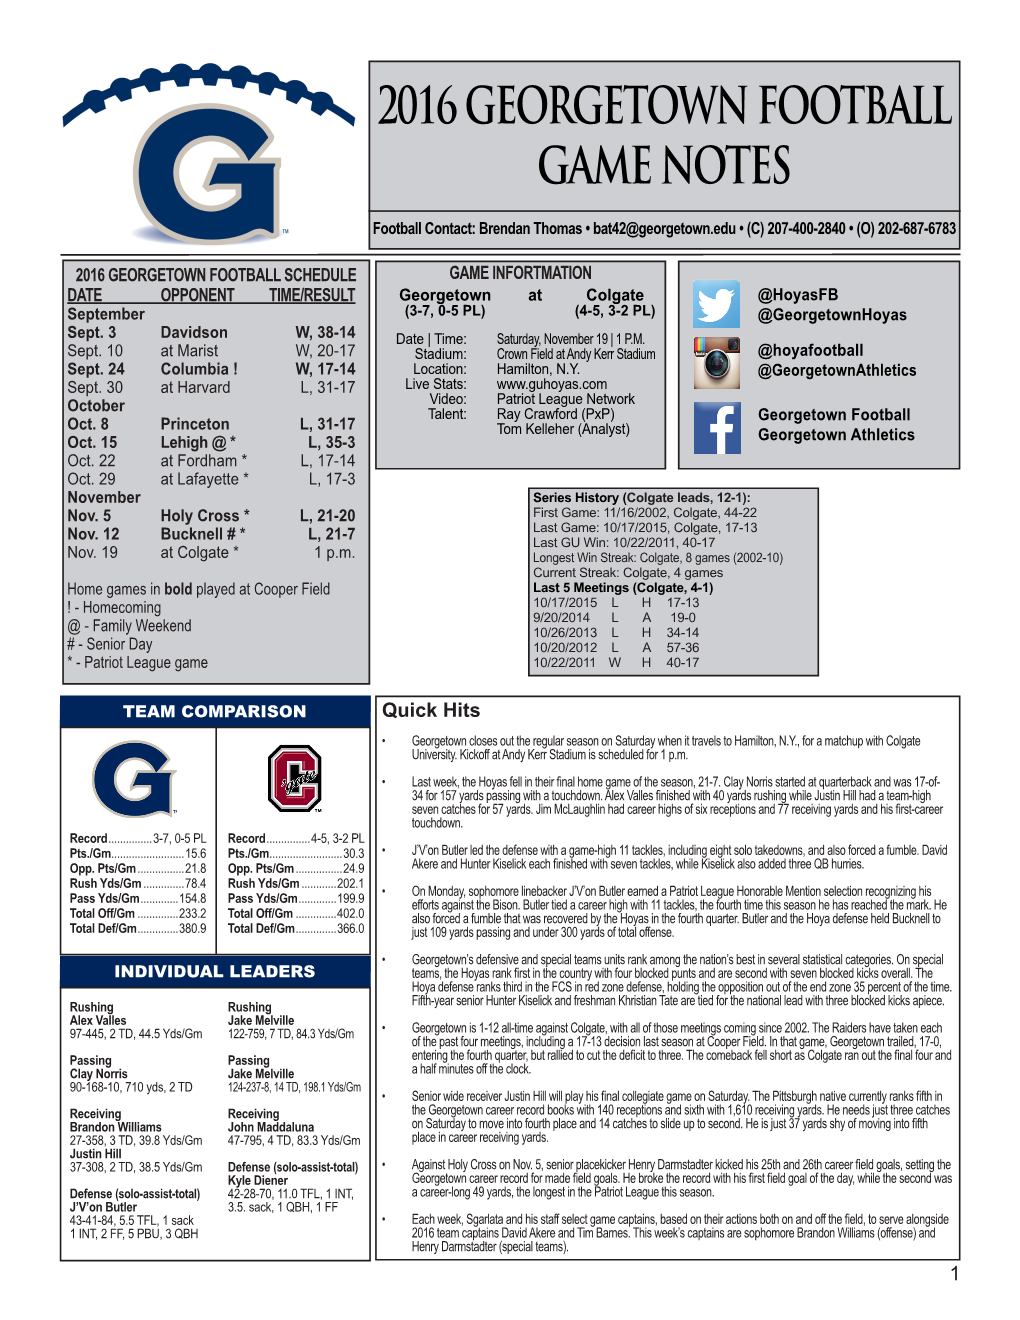 2016 Georgetown Football Game Notes 2016 Georgetown Football Game Notes 2016 Georgetown Football